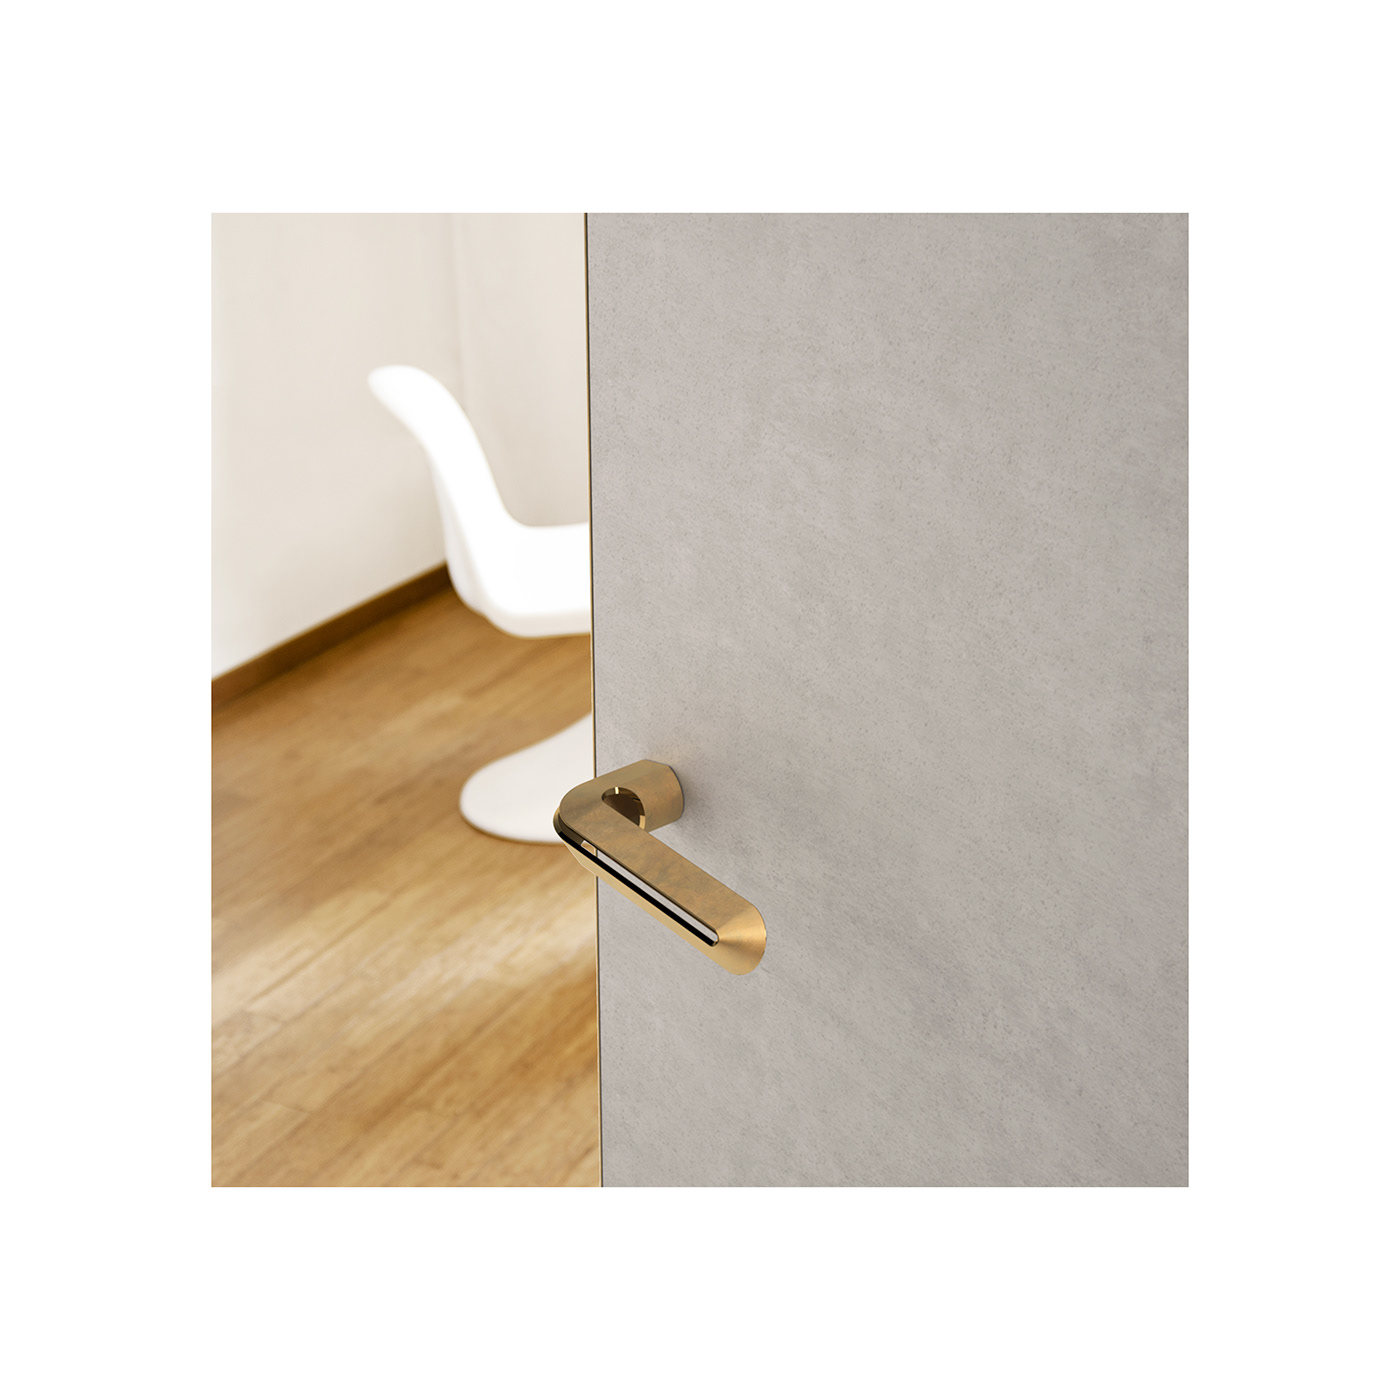 handle door product design metal minimal light furniture Interior home